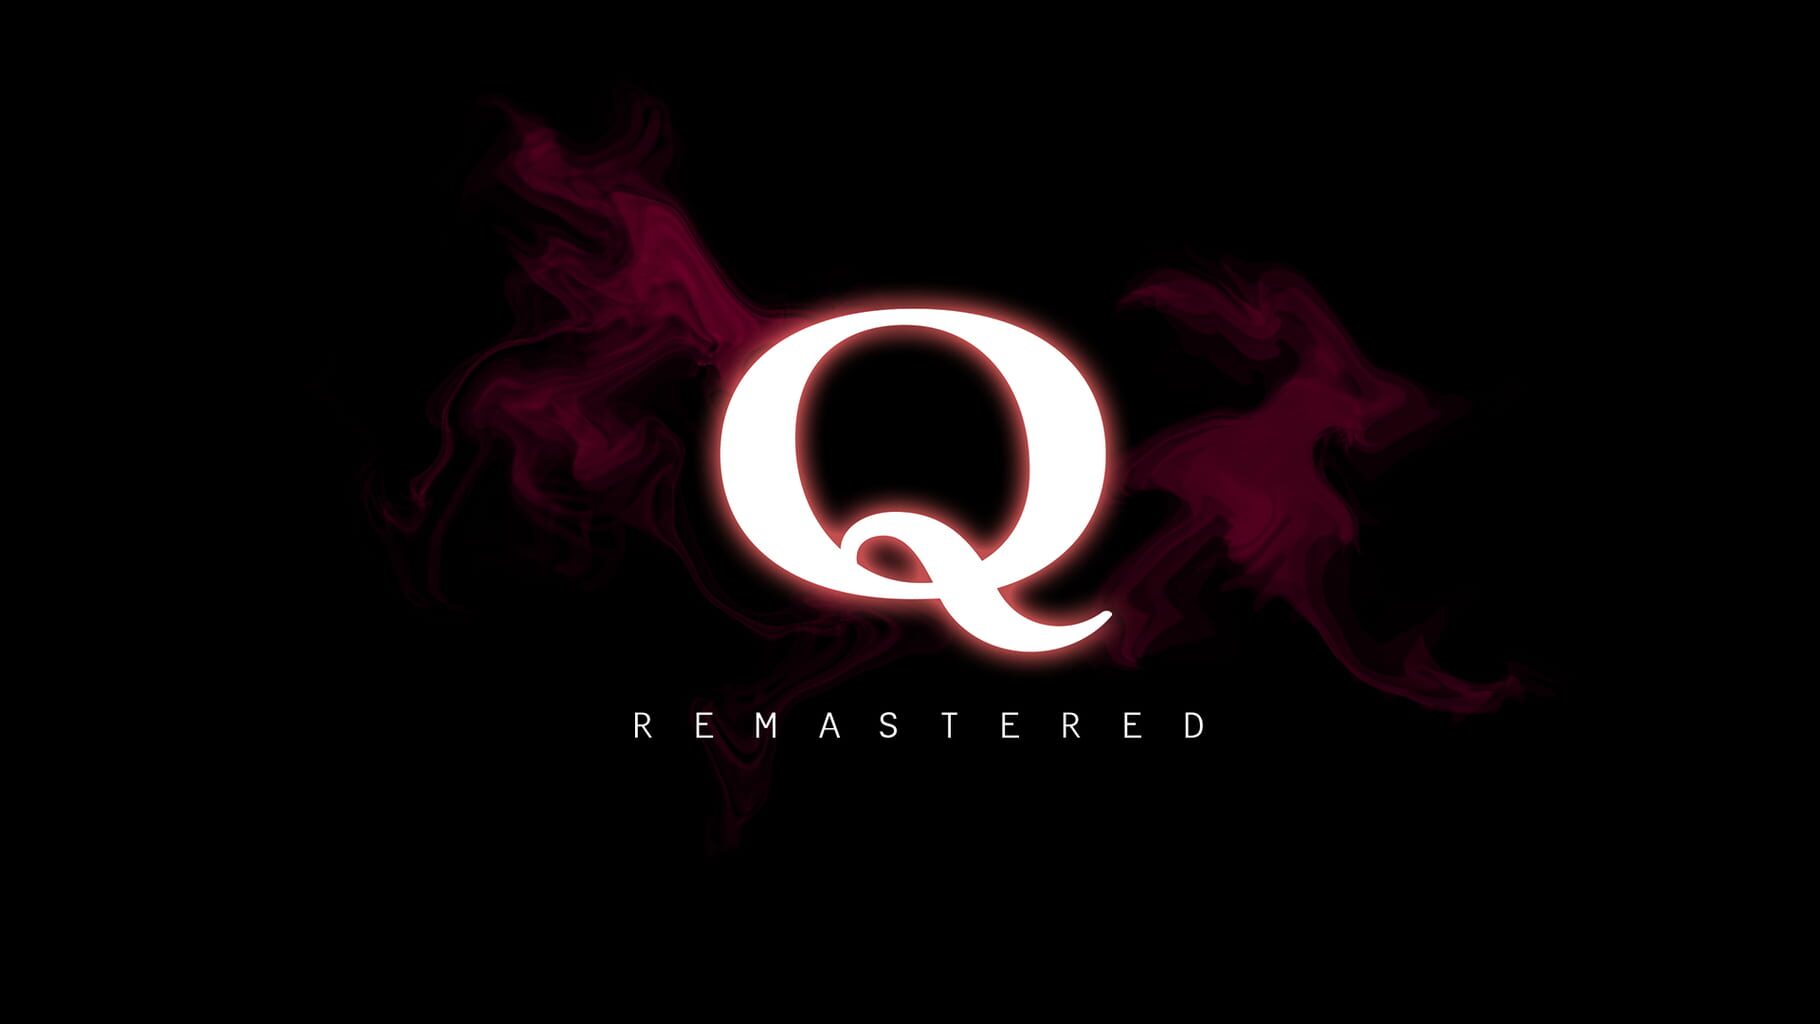 Q Remastered artwork